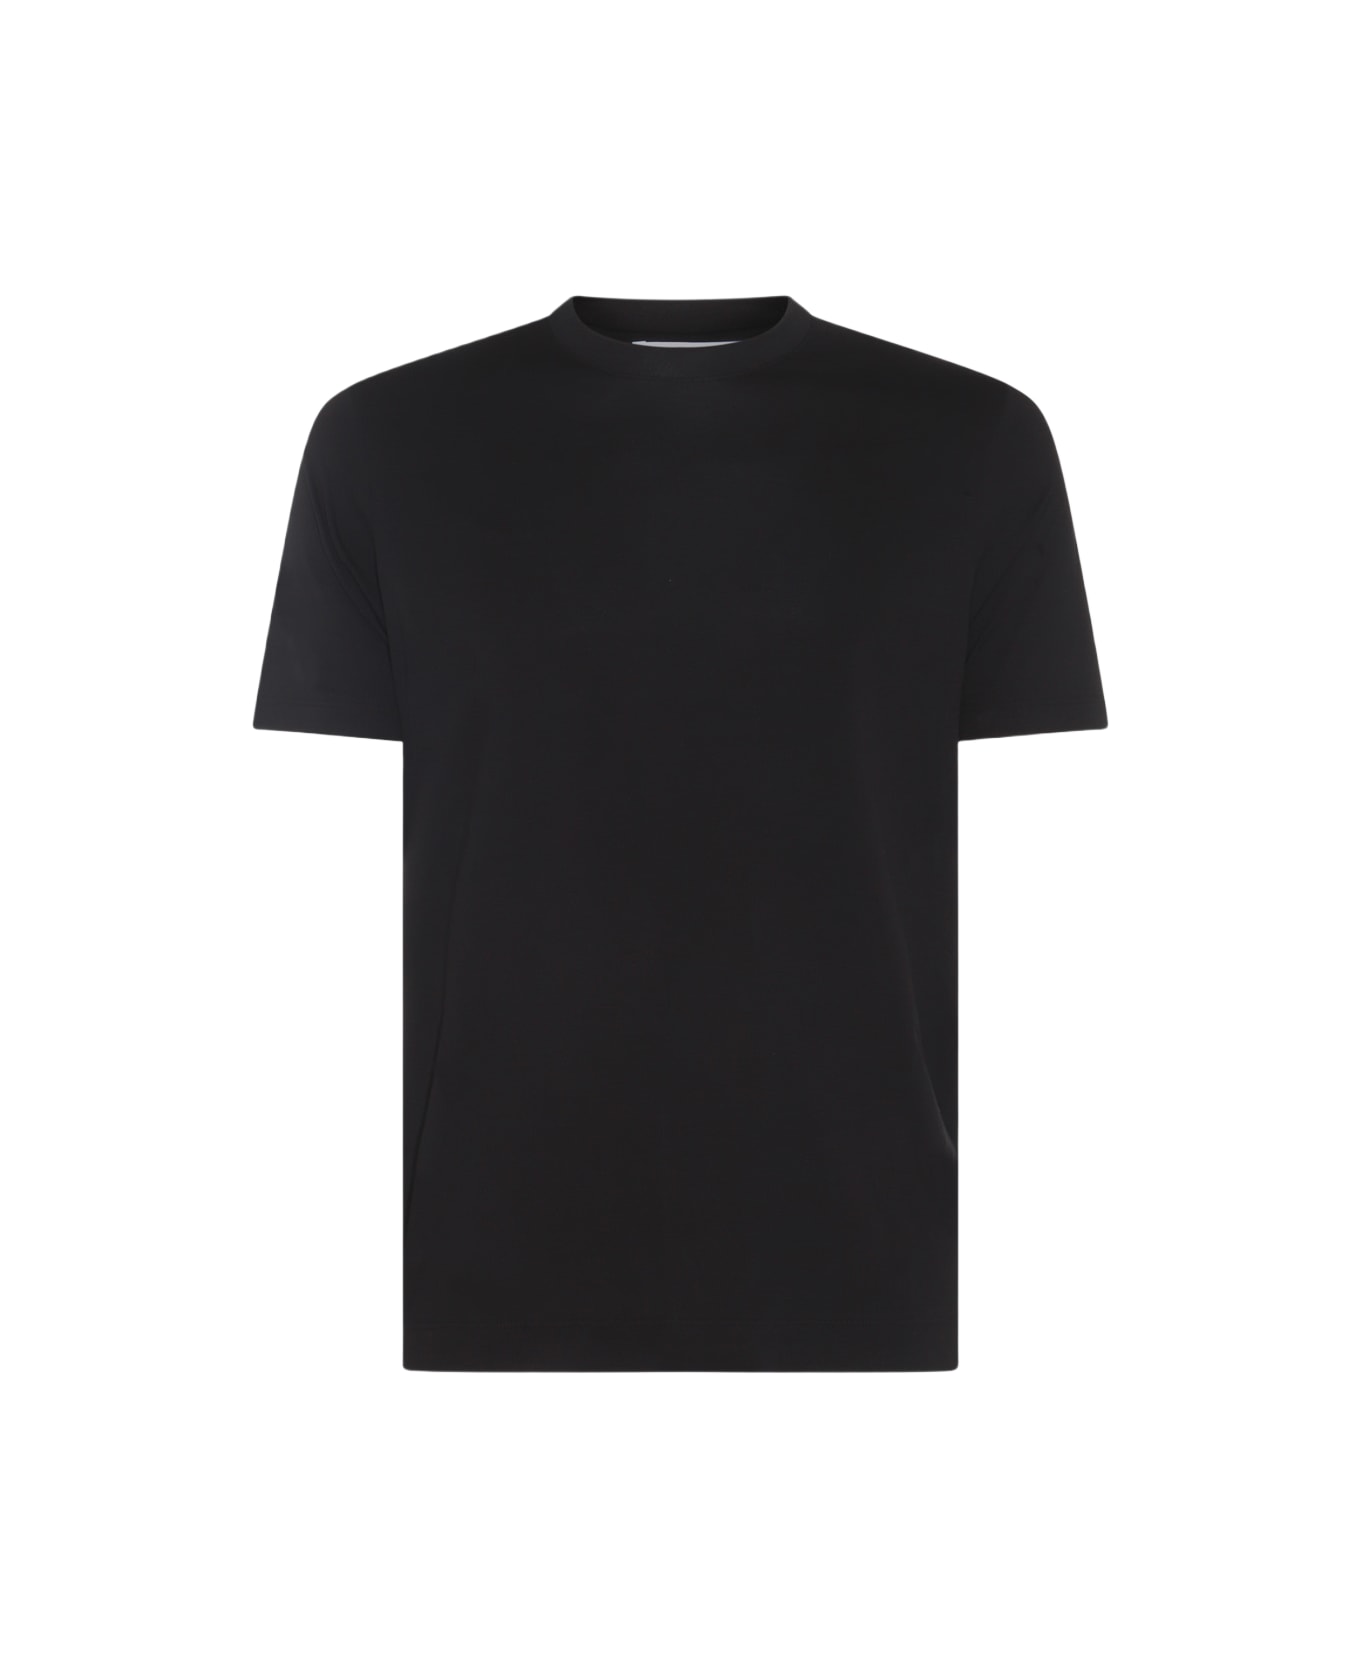 Cruciani Black Cotton Blend T-shirt - Black シャツ